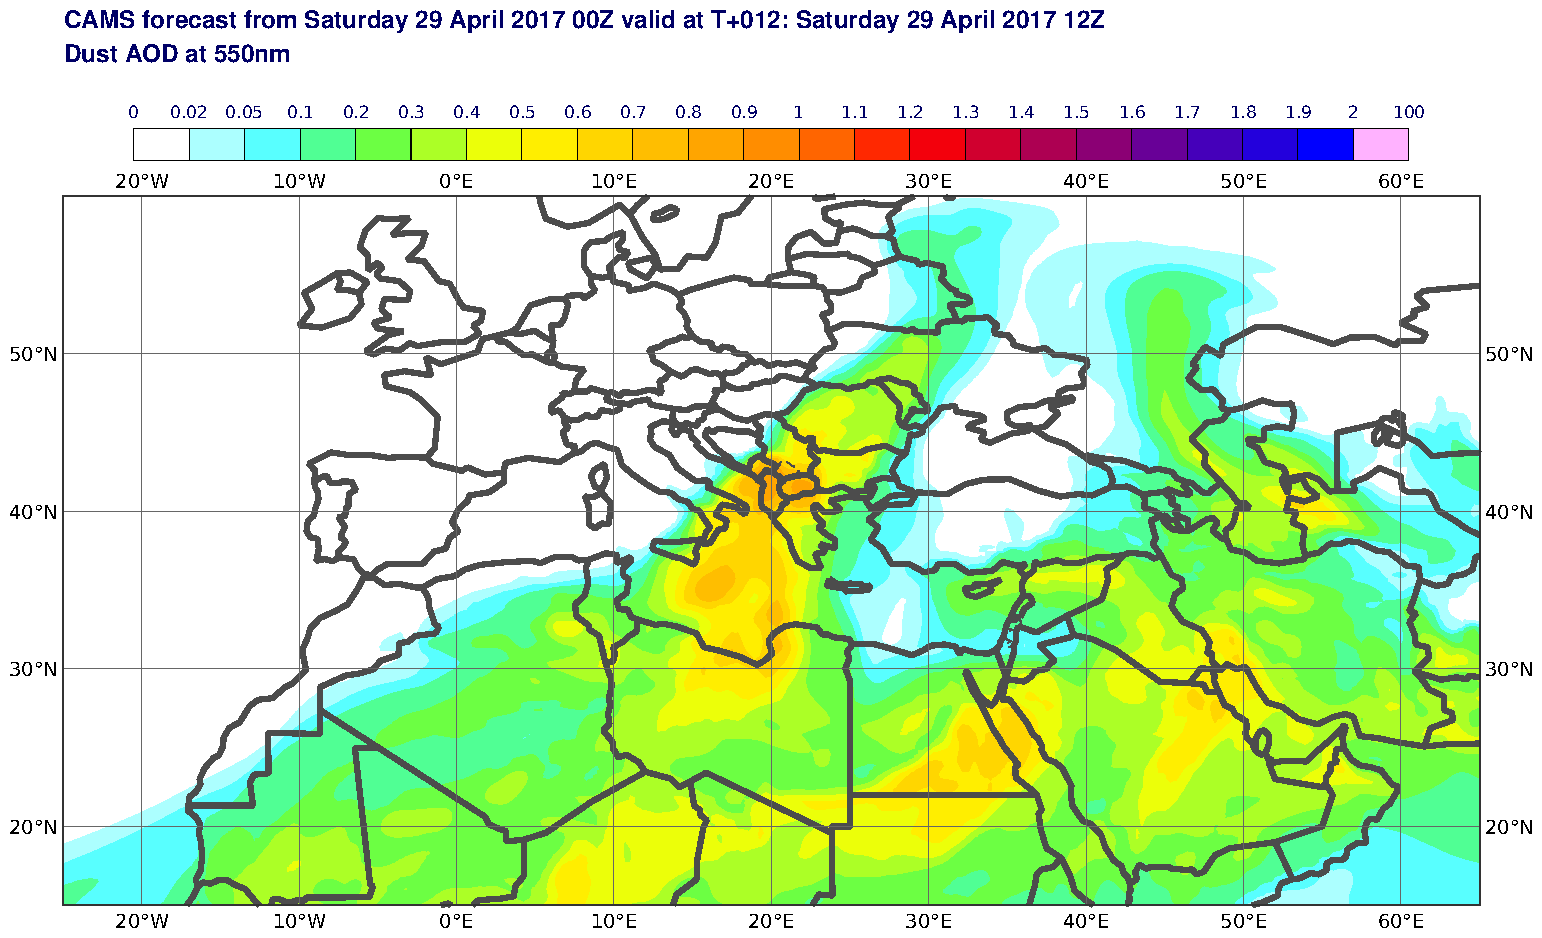 Dust AOD at 550nm valid at T12 - 2017-04-29 12:00